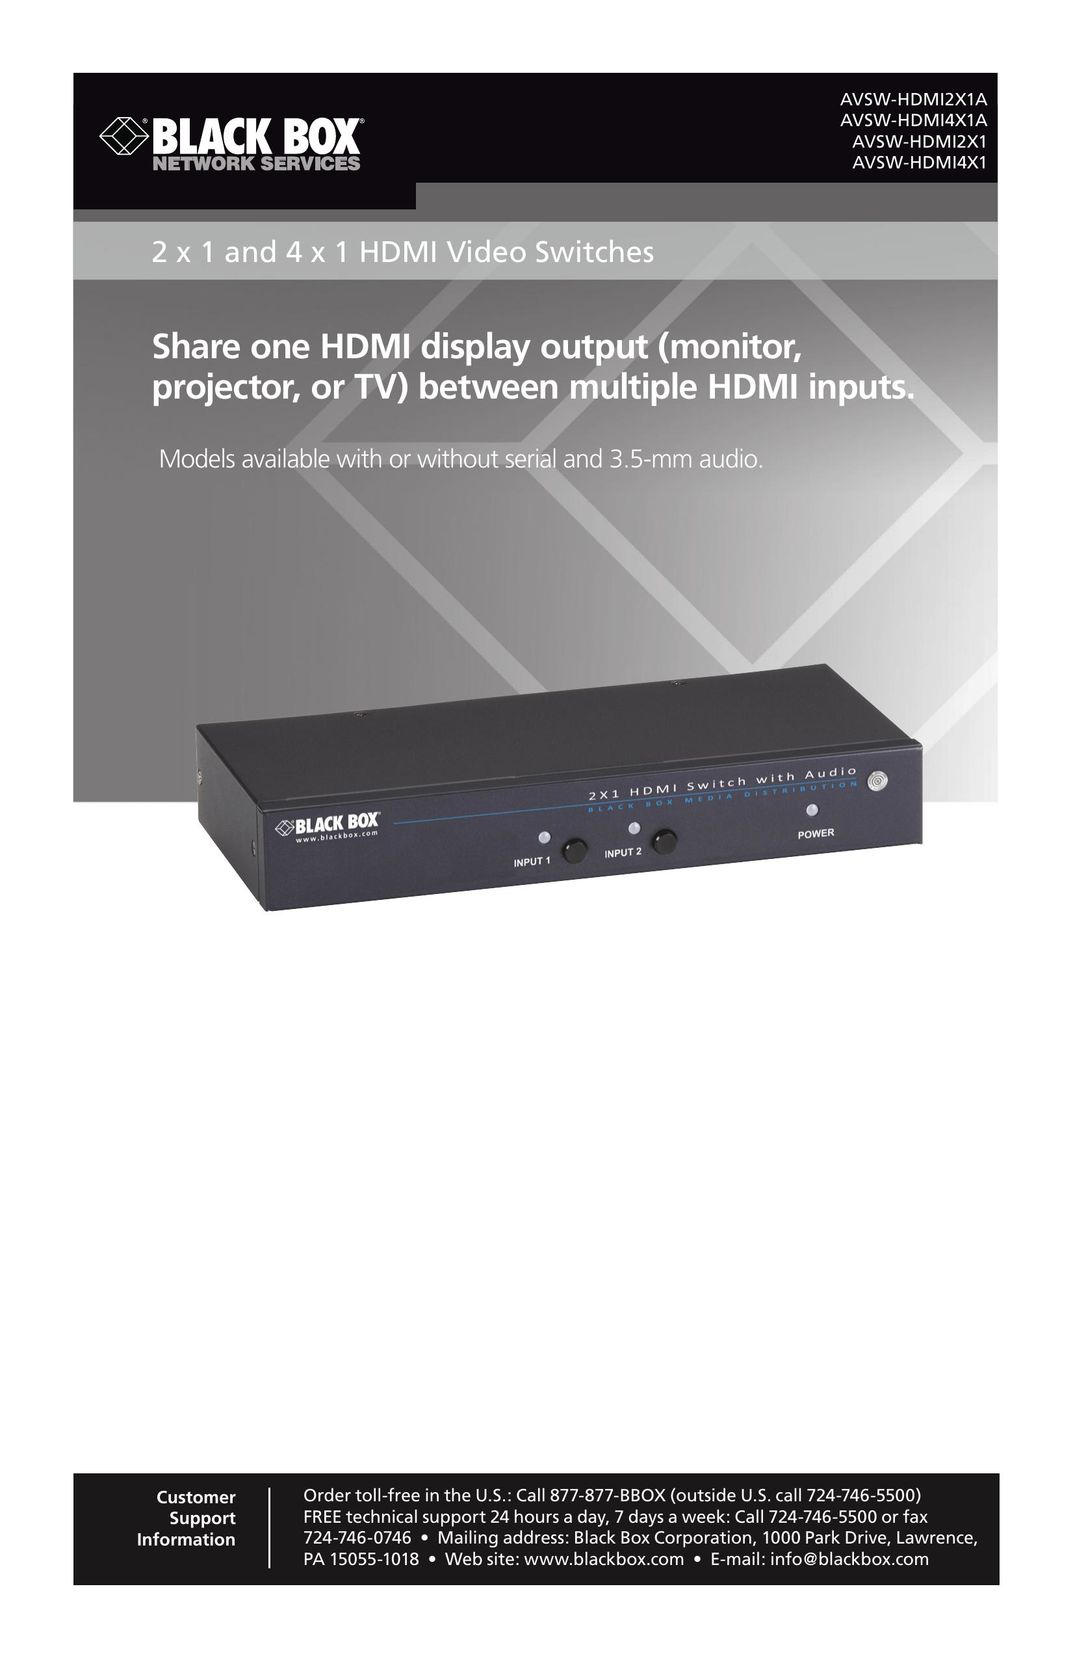 Black Box AVSW-HDMI2X1A TV Video Accessories User Manual